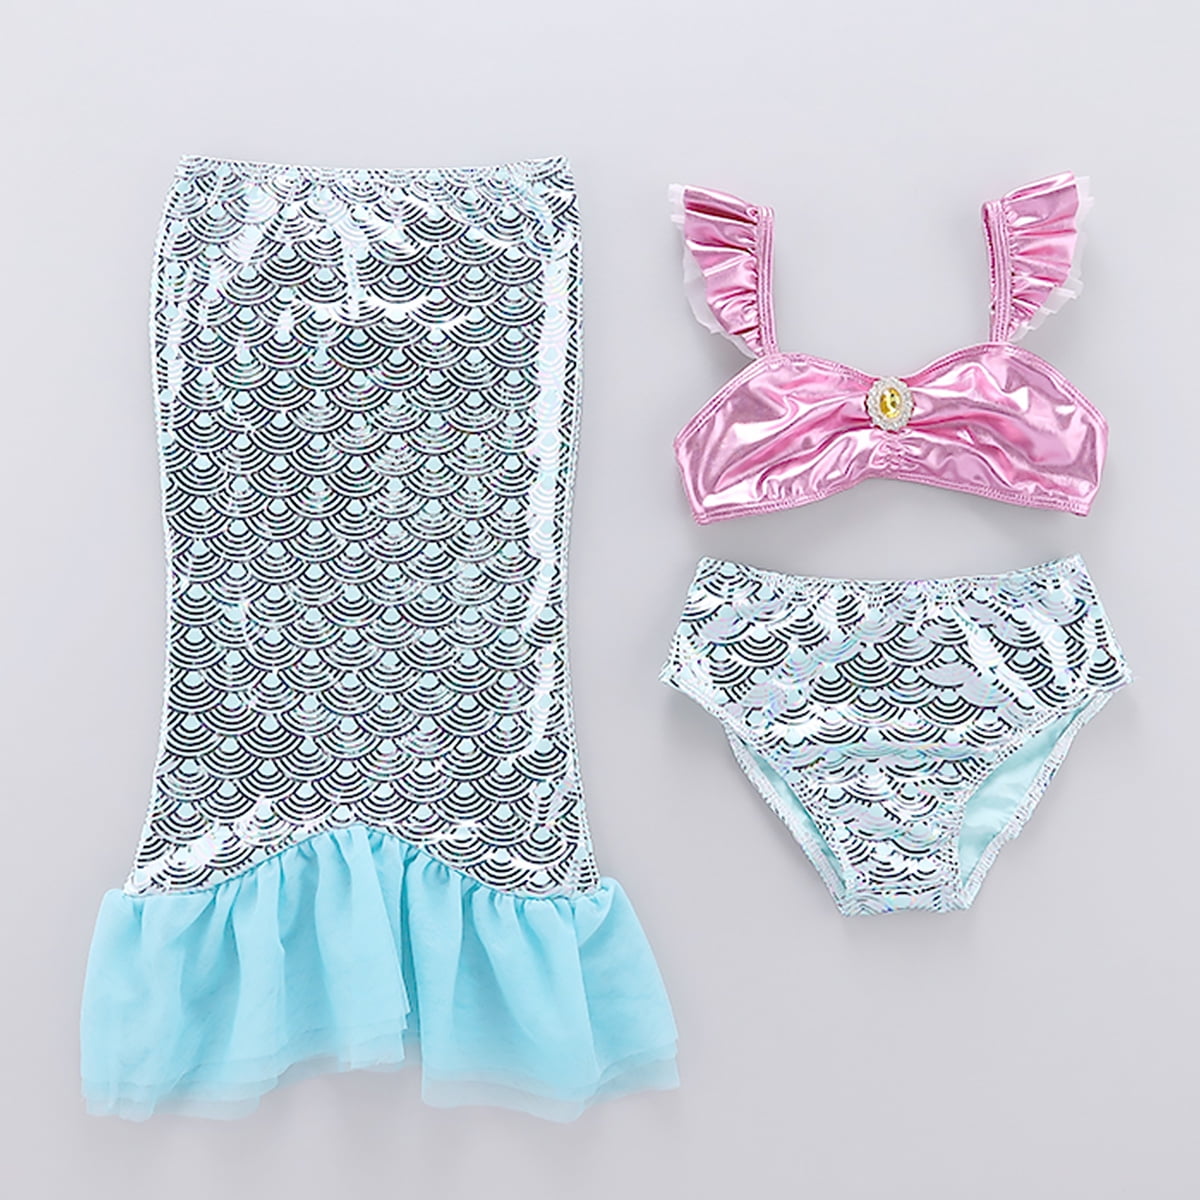 WHOISHE 3 PCS Girls Swimsuit Mermaid Tails for Swimming Princess Bikini Bikini Set Dress Up Party 